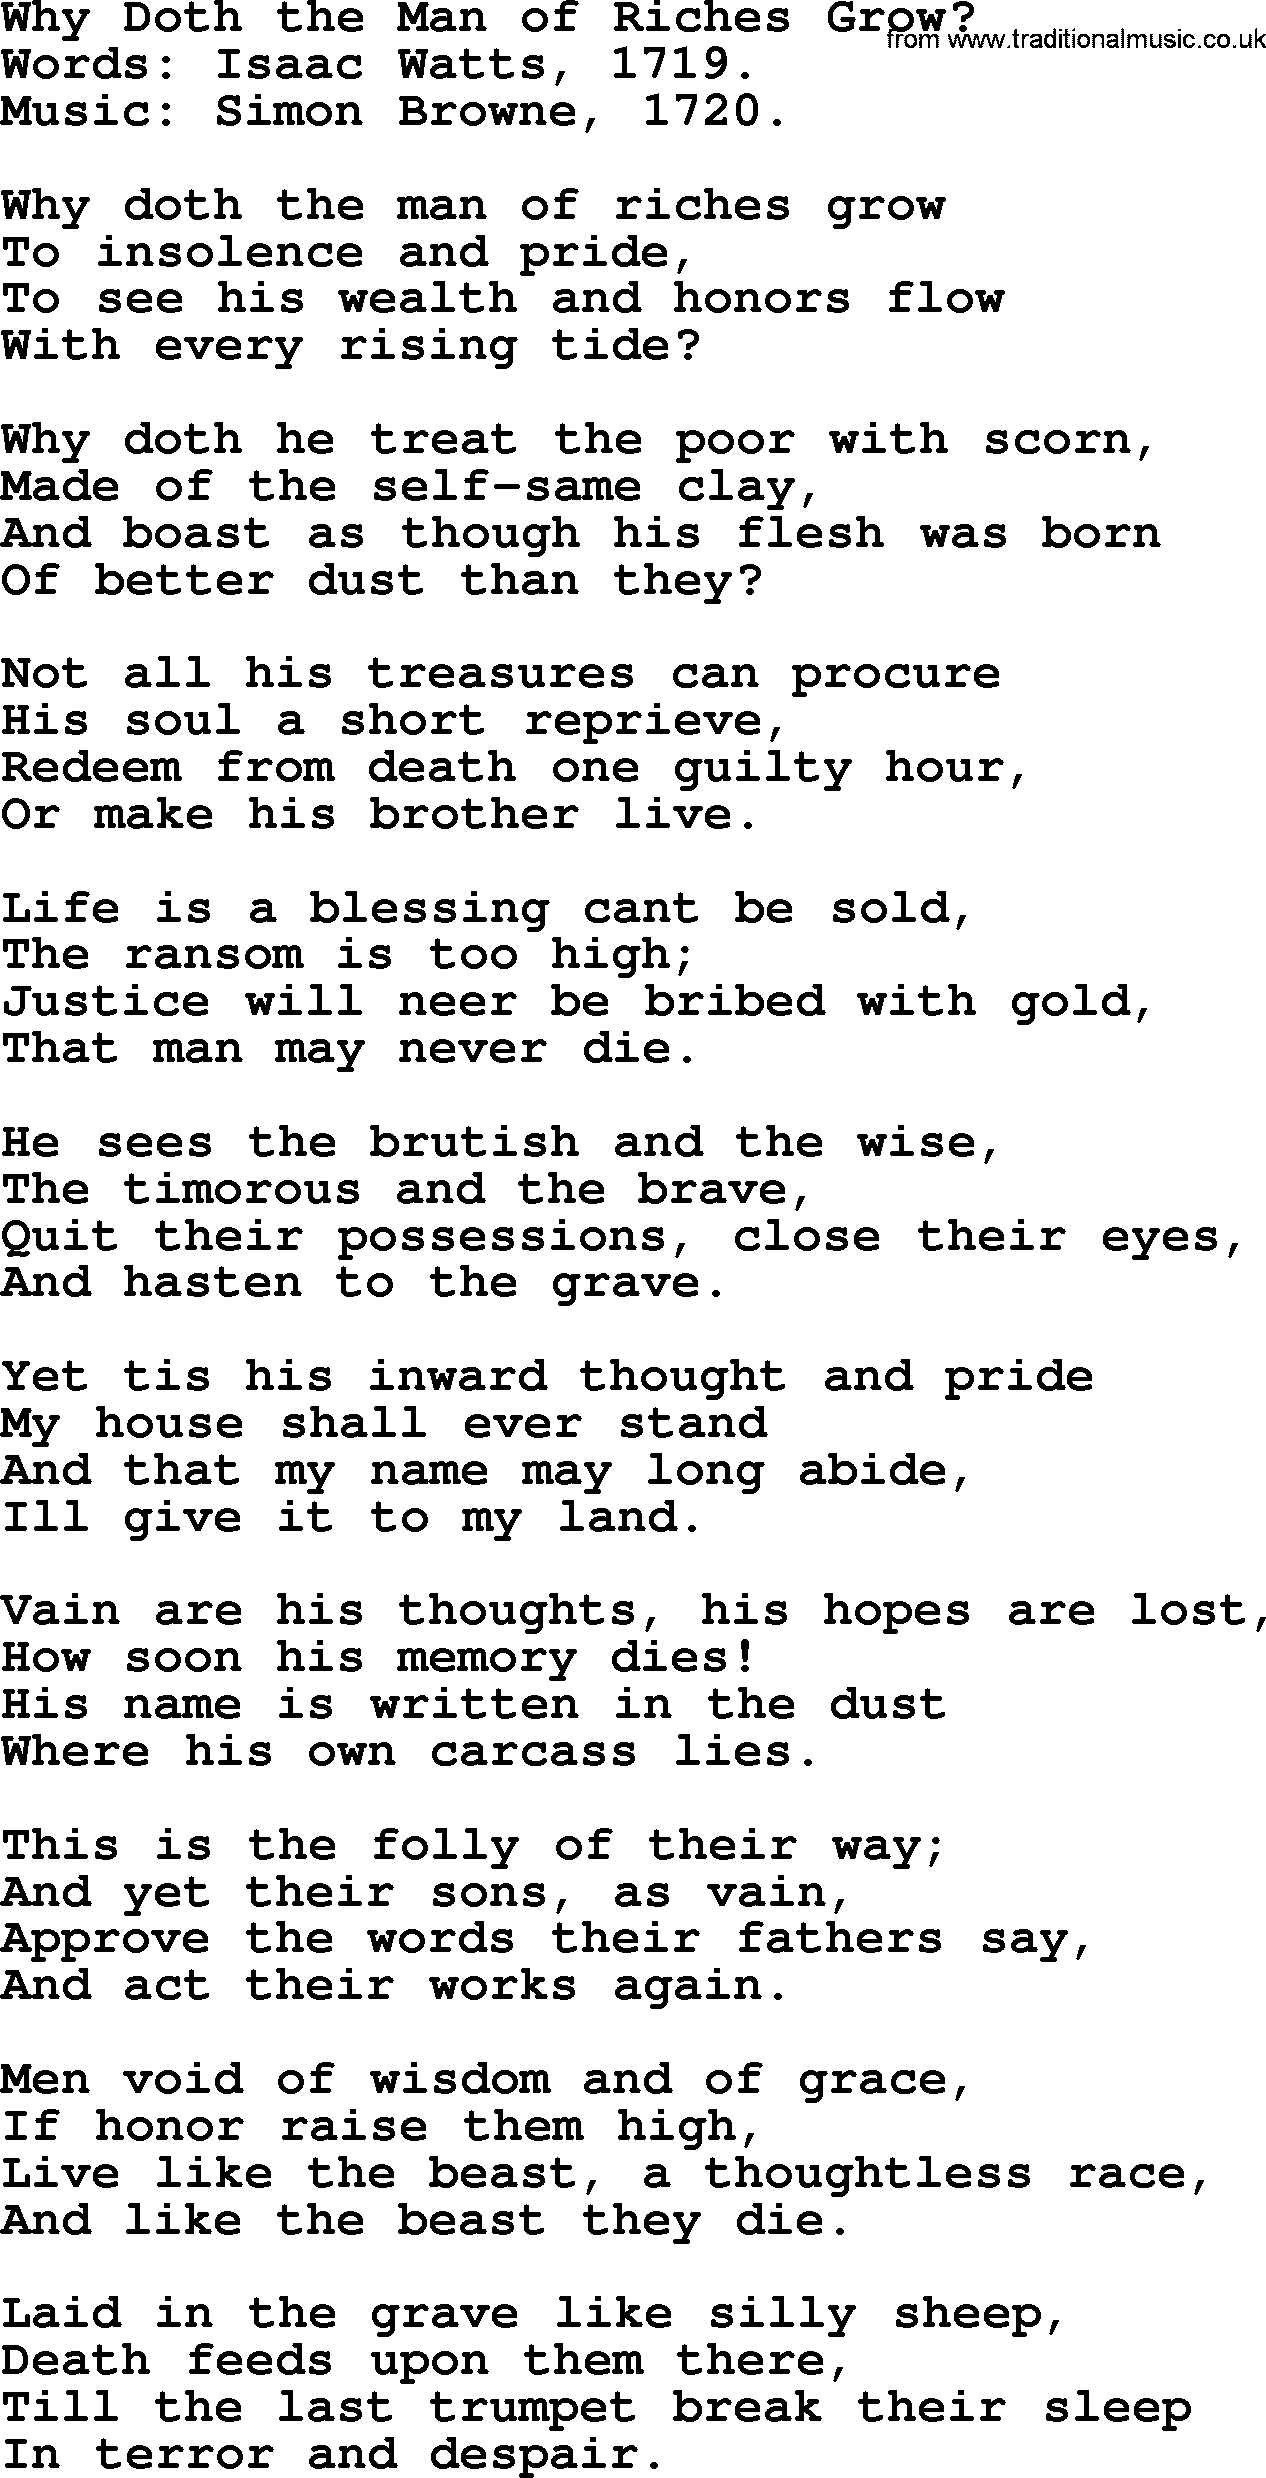 Isaac Watts Christian hymn: Why Doth the Man of Riches Grow_- lyricss